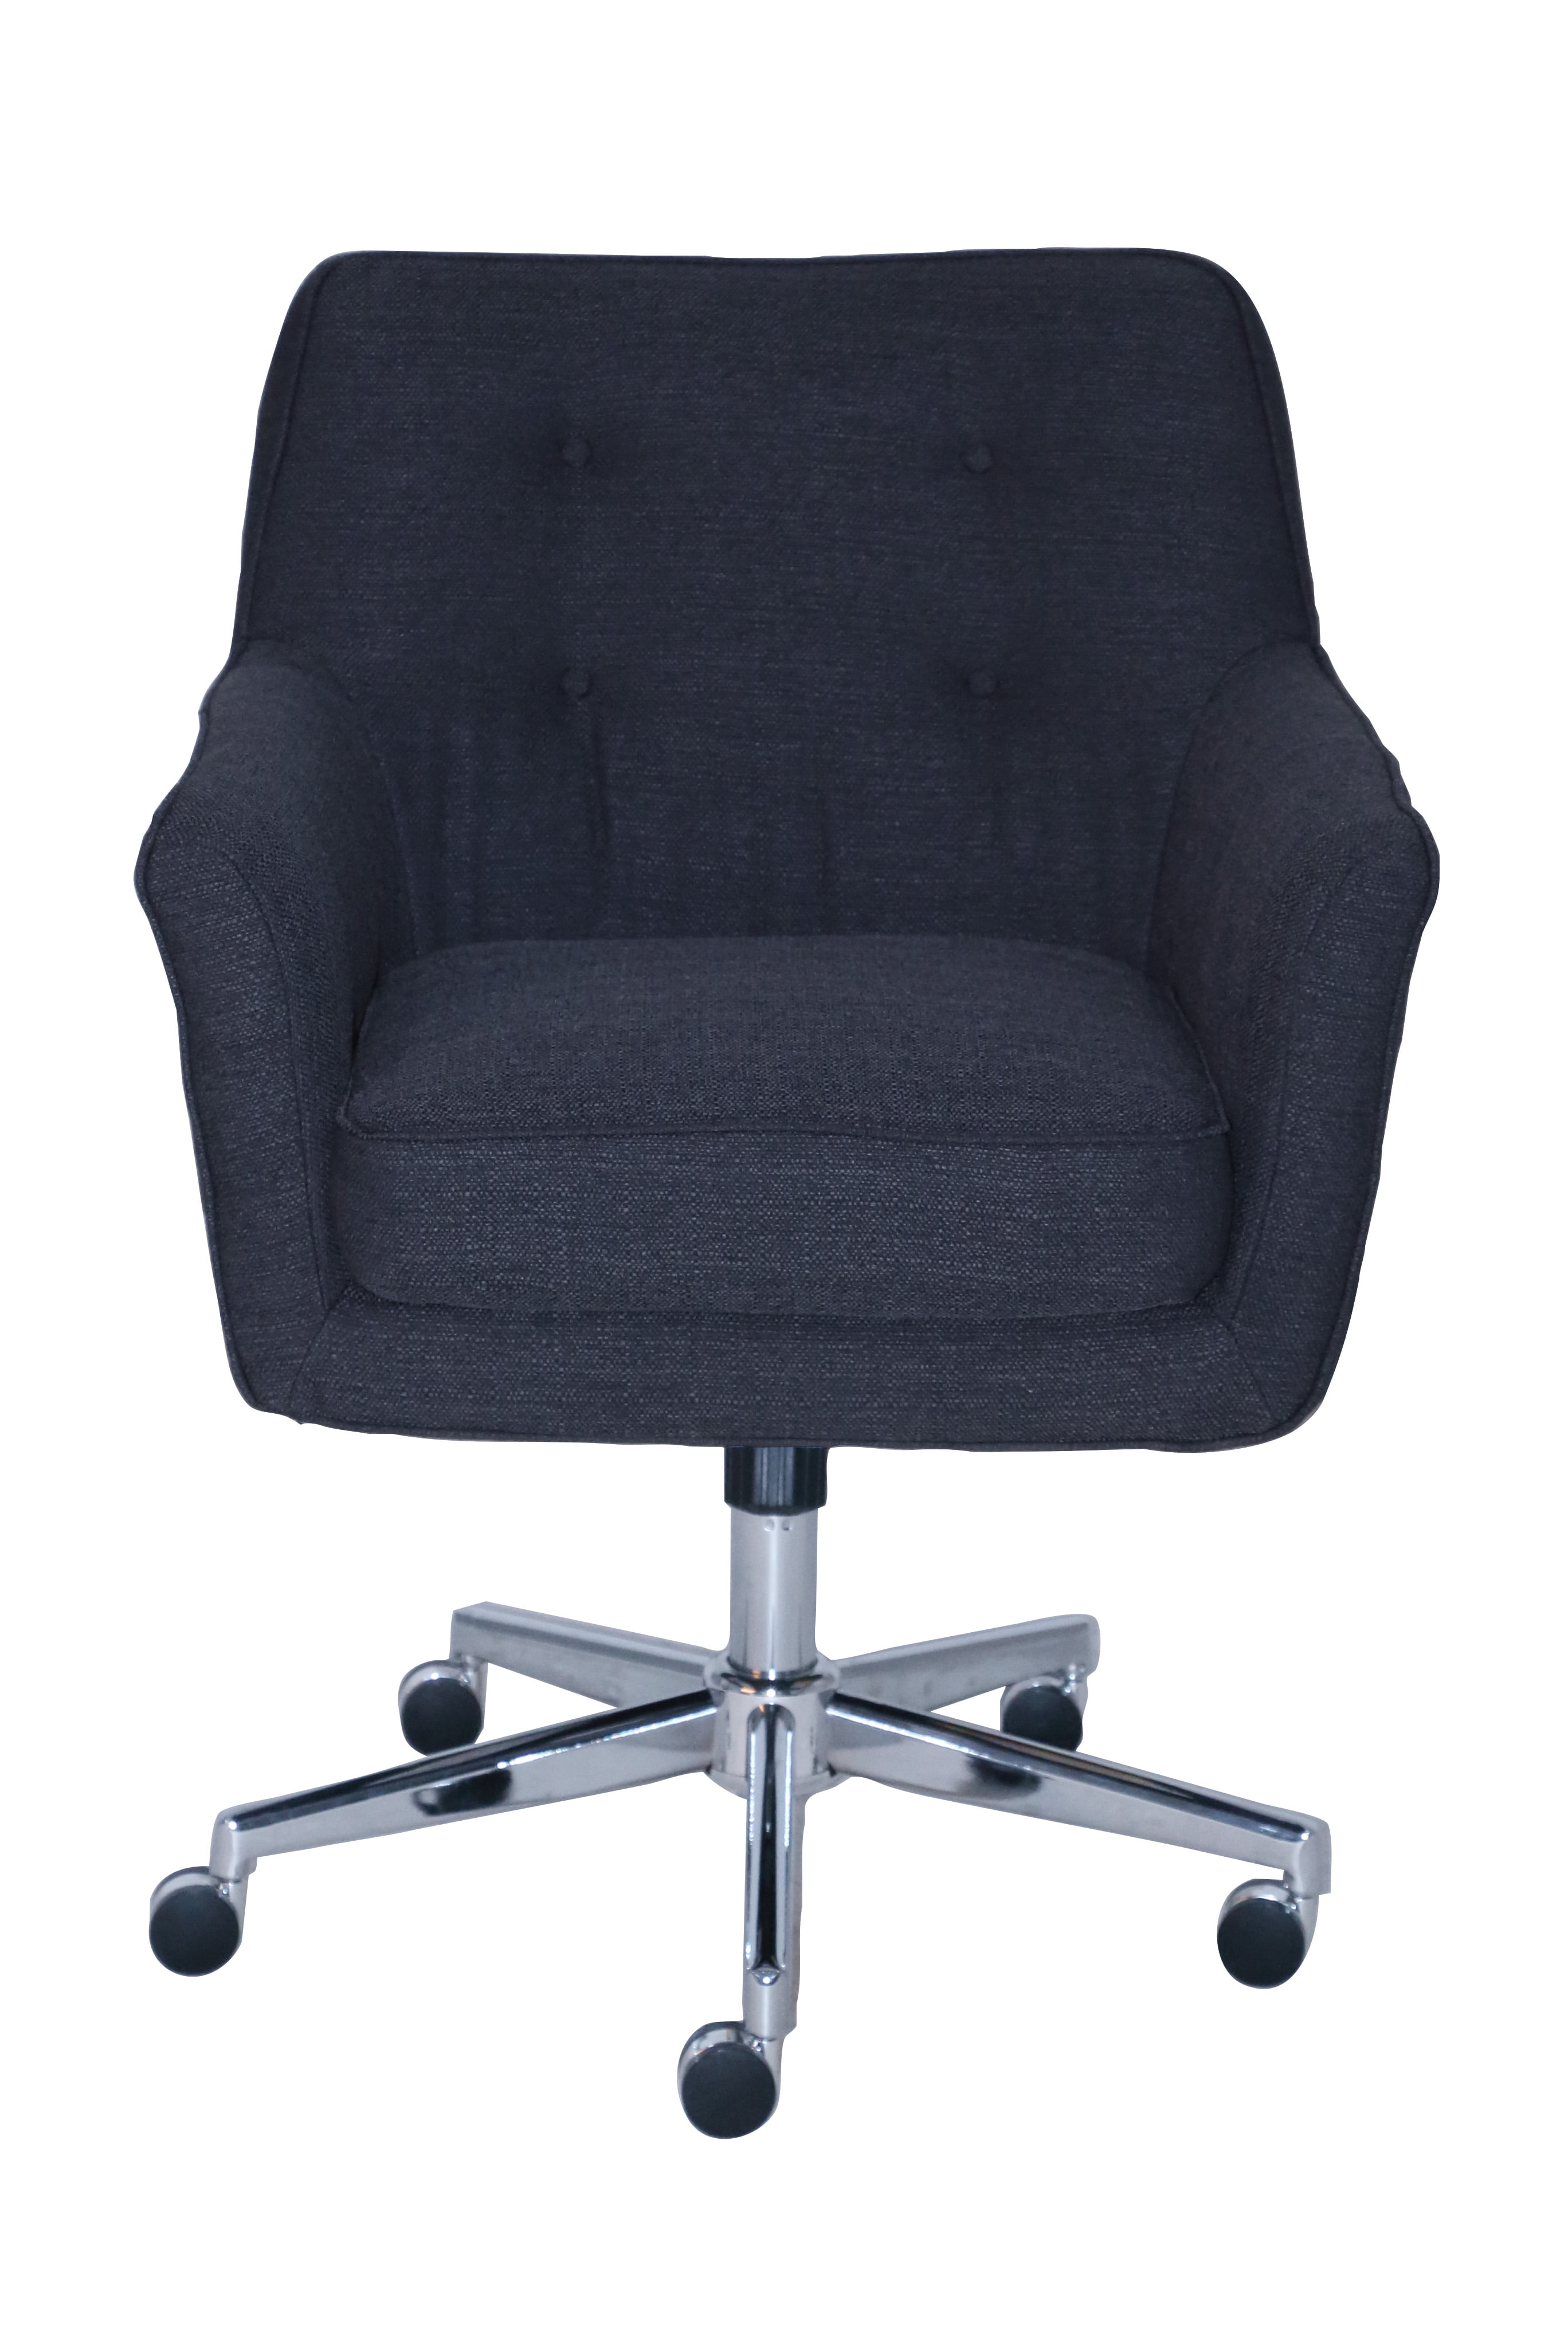 Serta Ashland Memory Foam & Twill Fabric Home Office Chair Blue